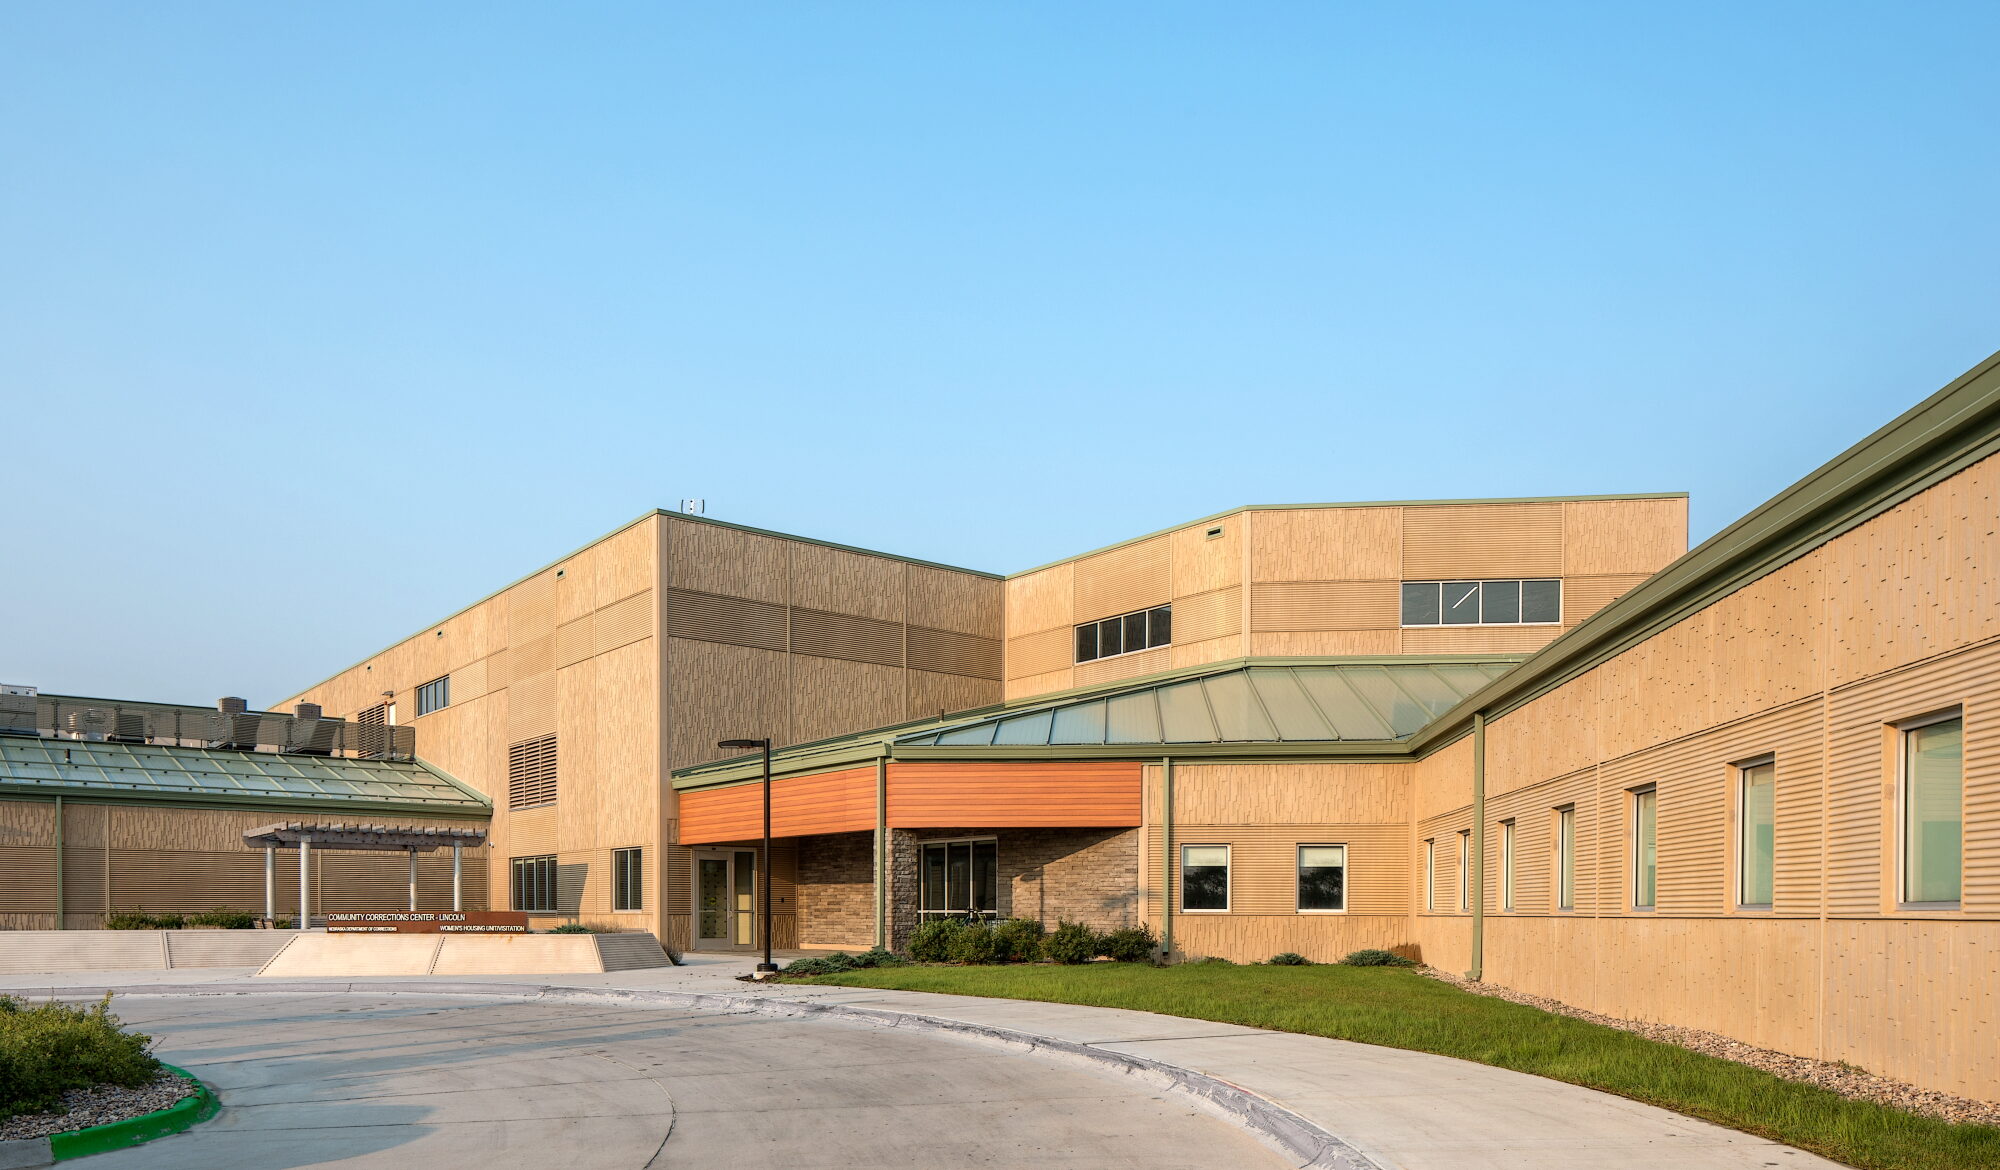 Architecture design of Platte County Detention Facility exterior in Nebraska.